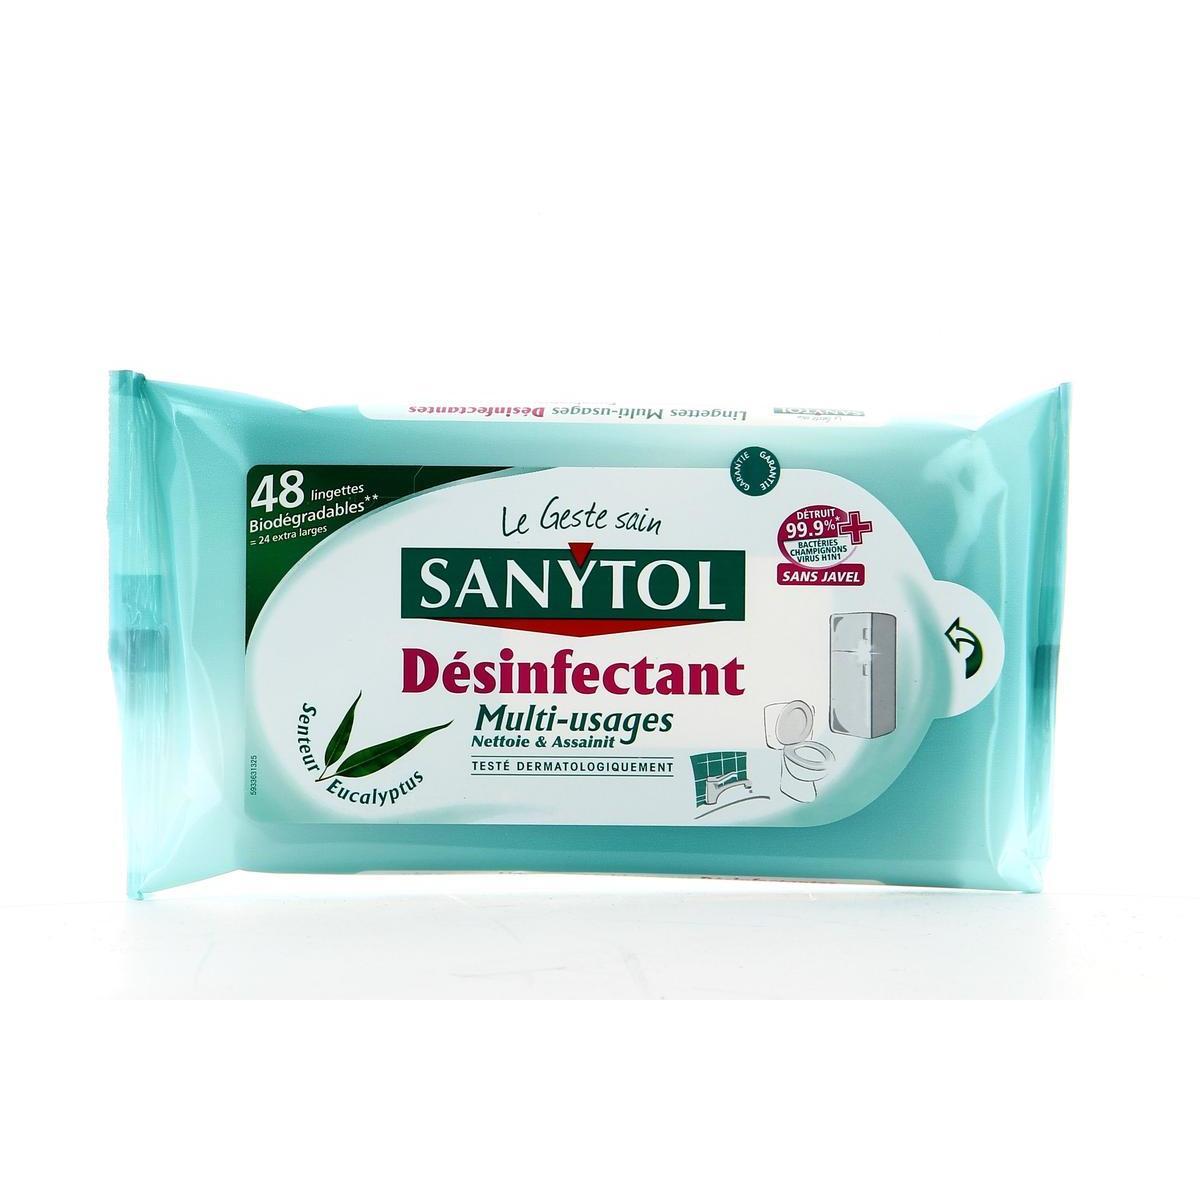 48 lingettes multi-usage Sanytol senteur eucalyptus